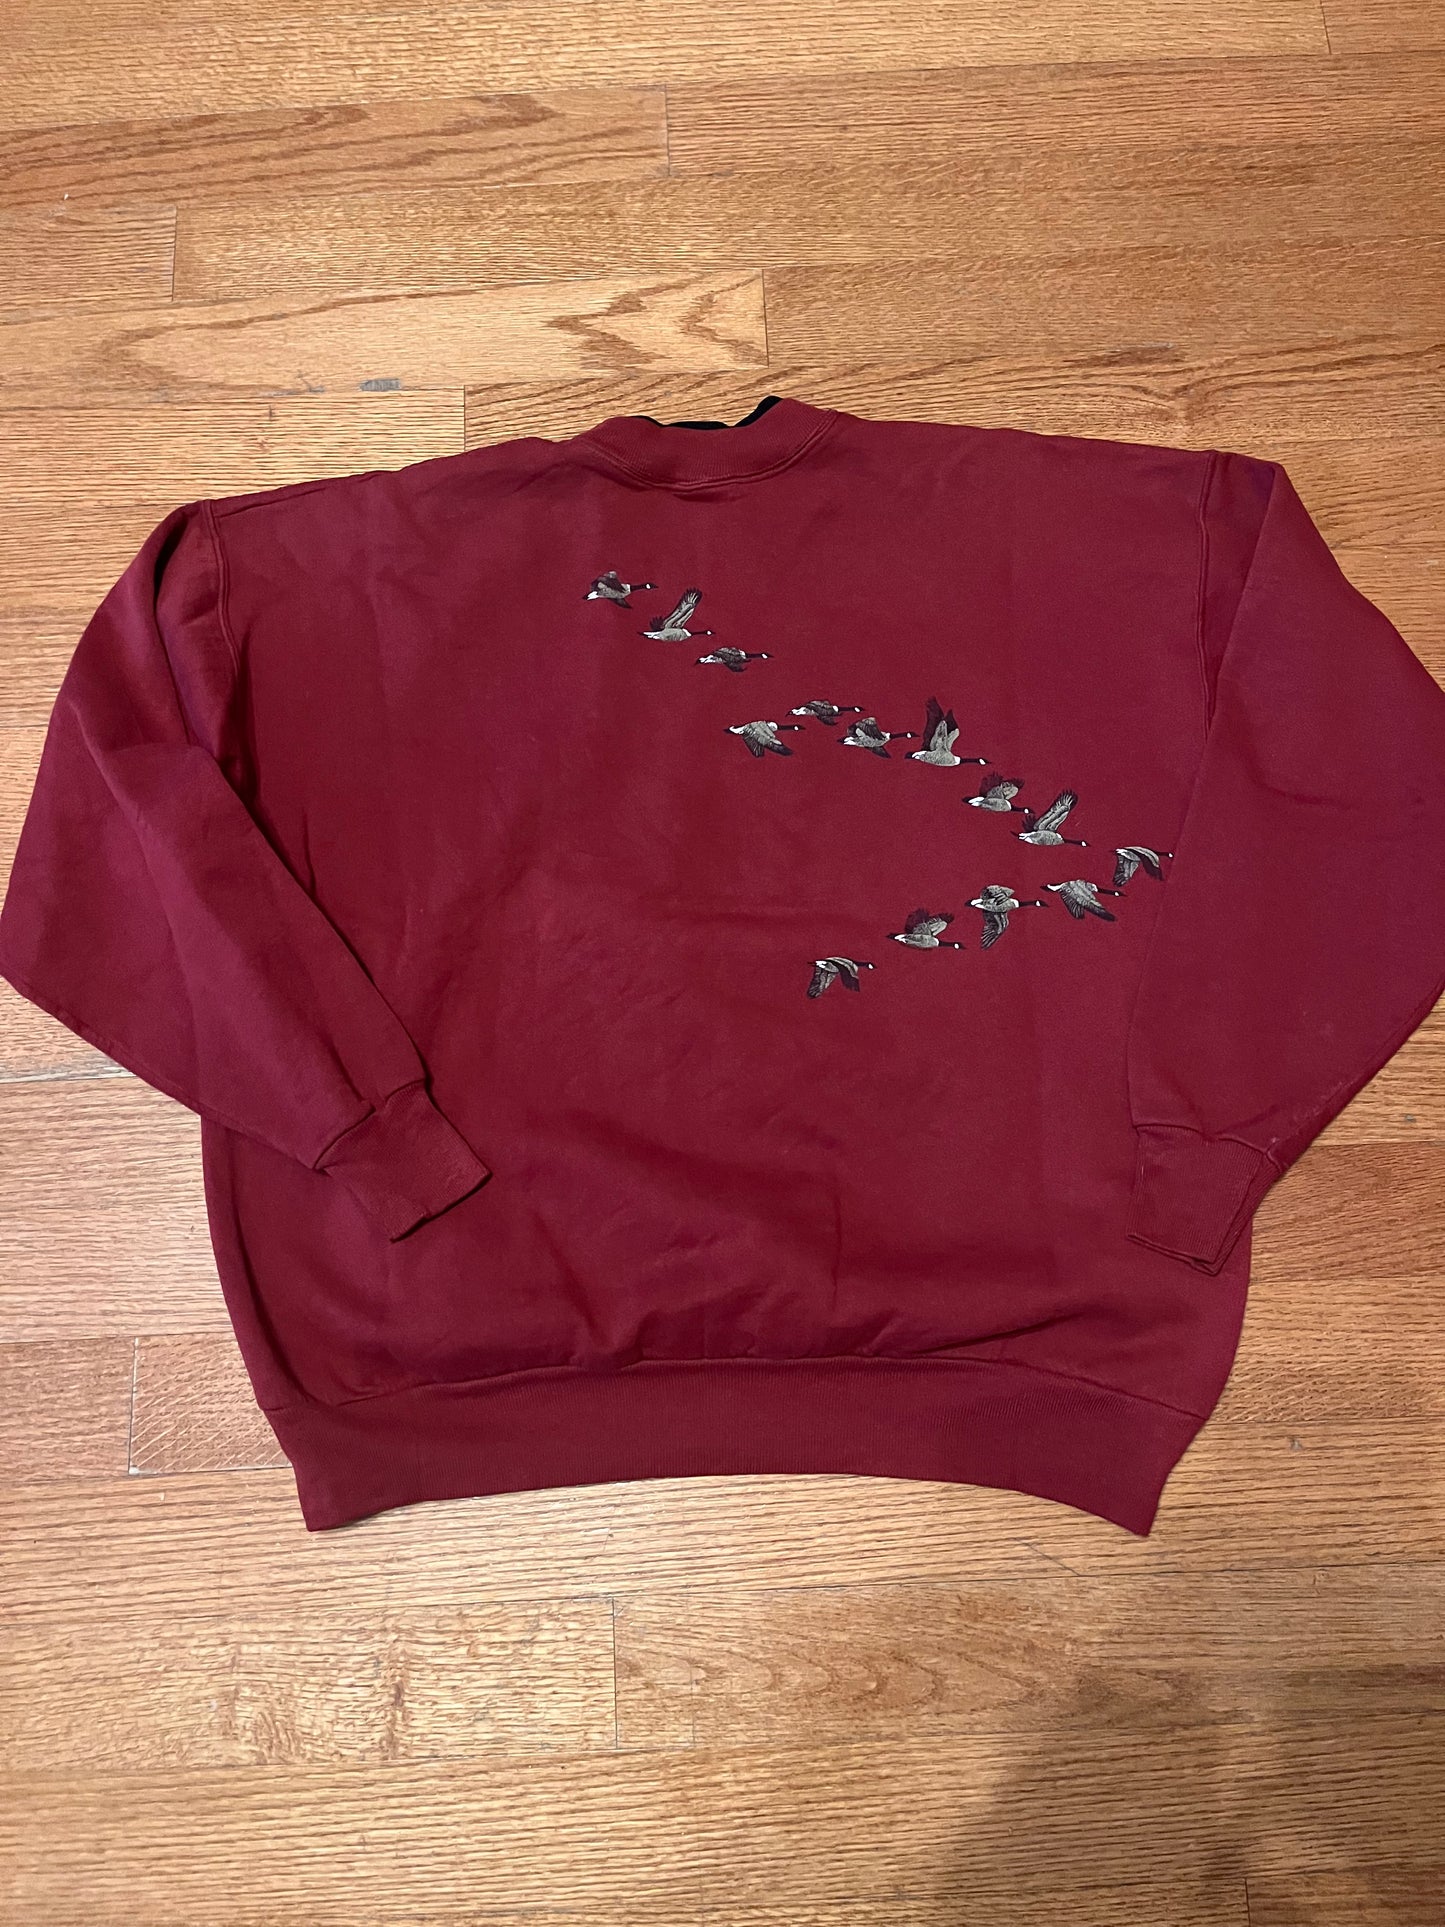 Vintage Geese Sweater XL